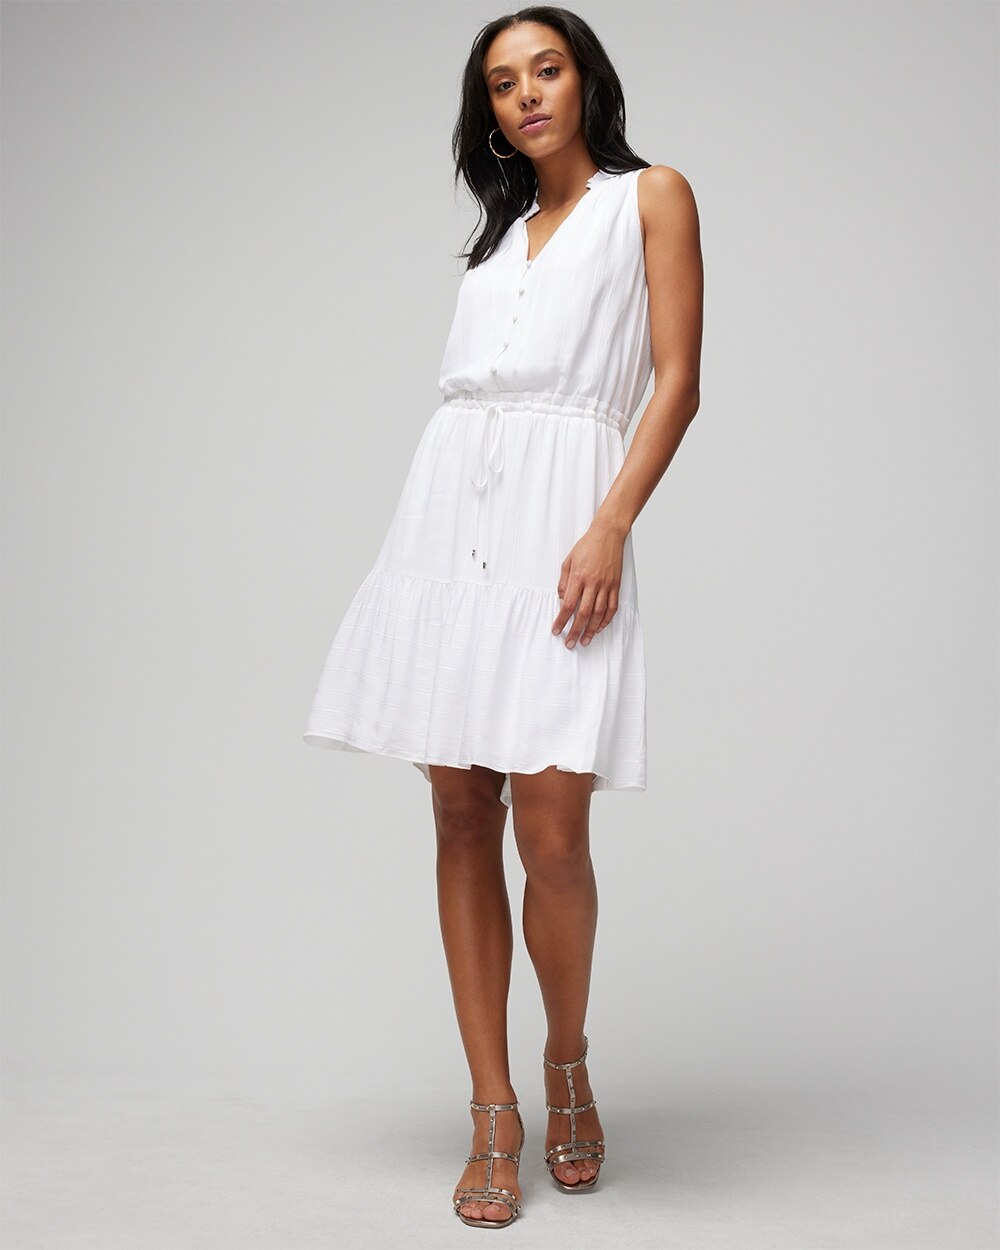 Perfect White Summer Dress